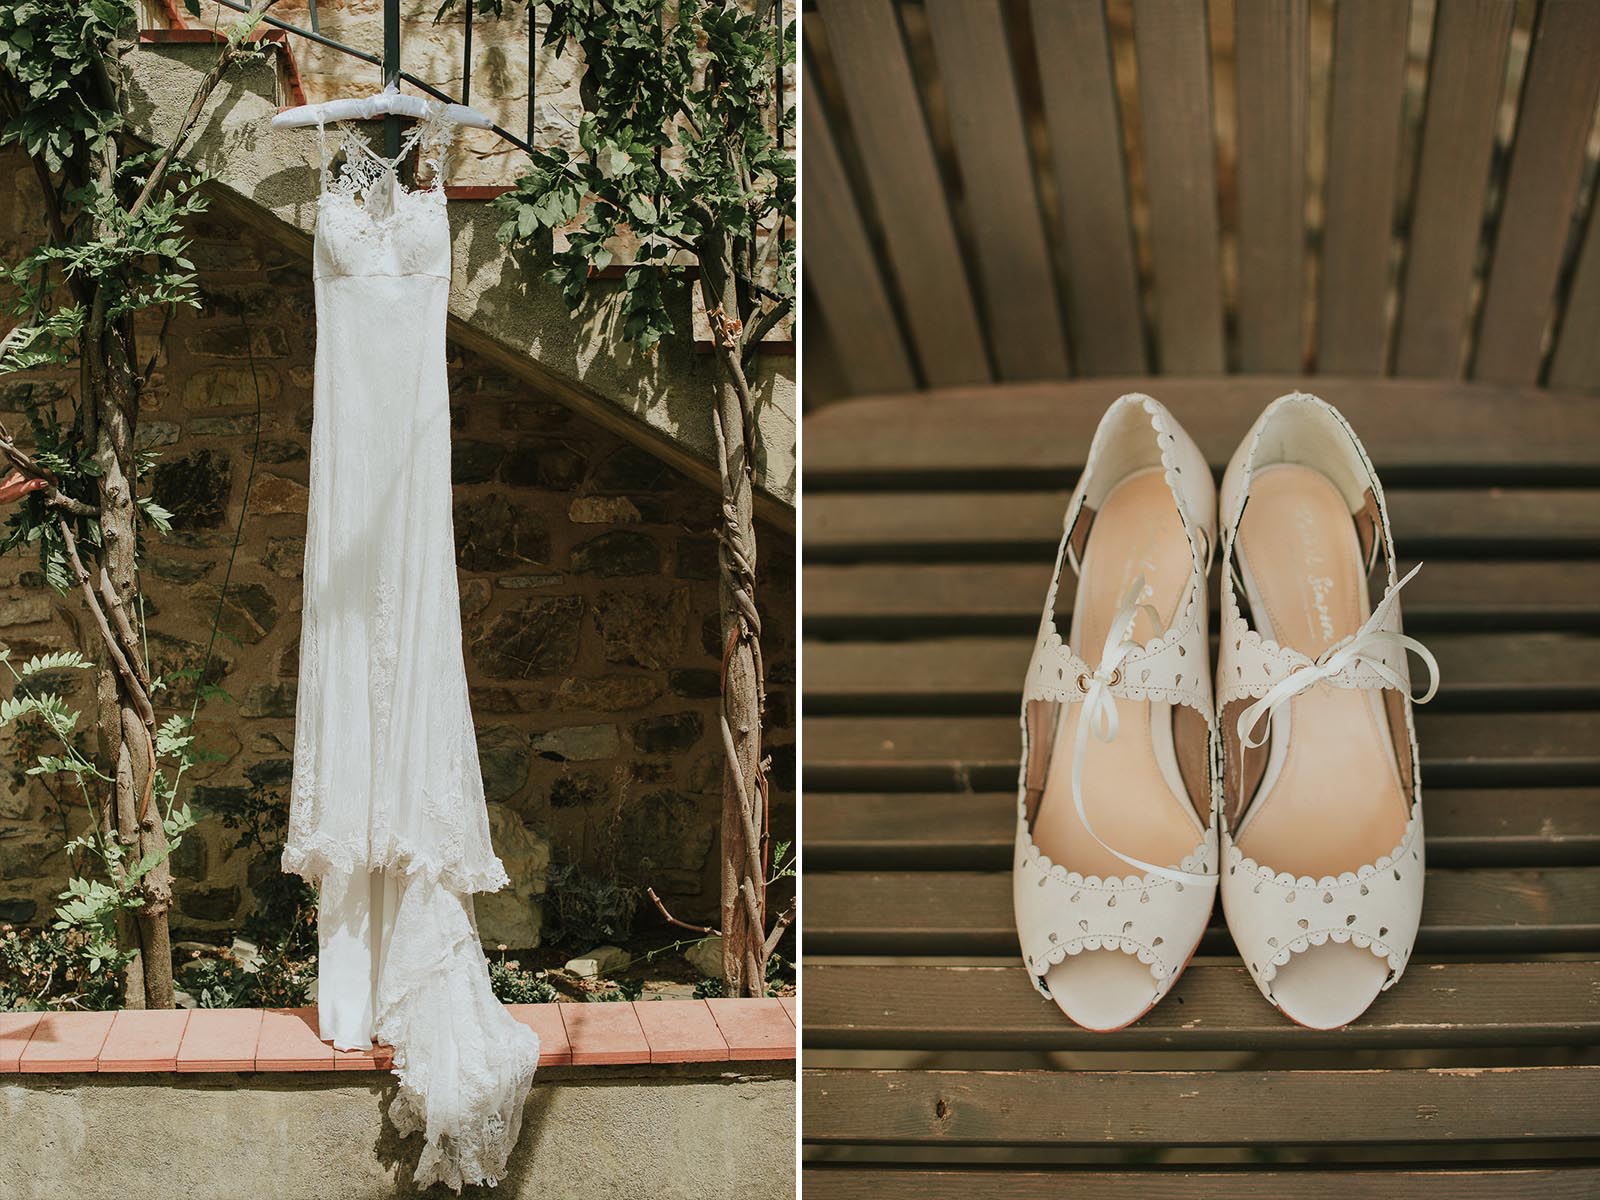 White wedding dress and ivory shoes